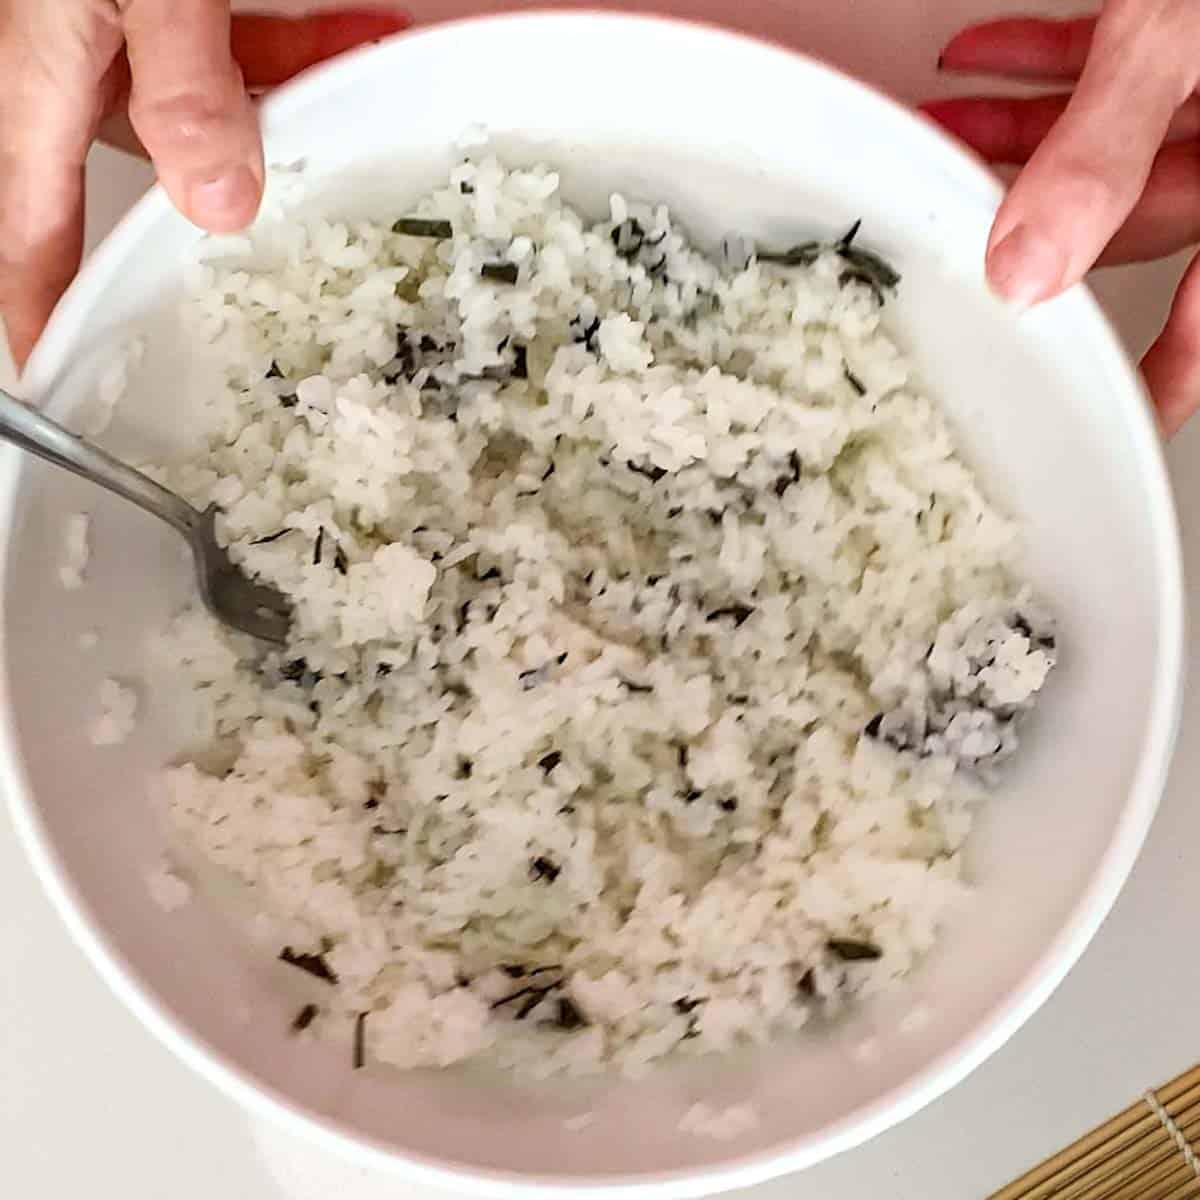 sushi rice mixed with shredded nori